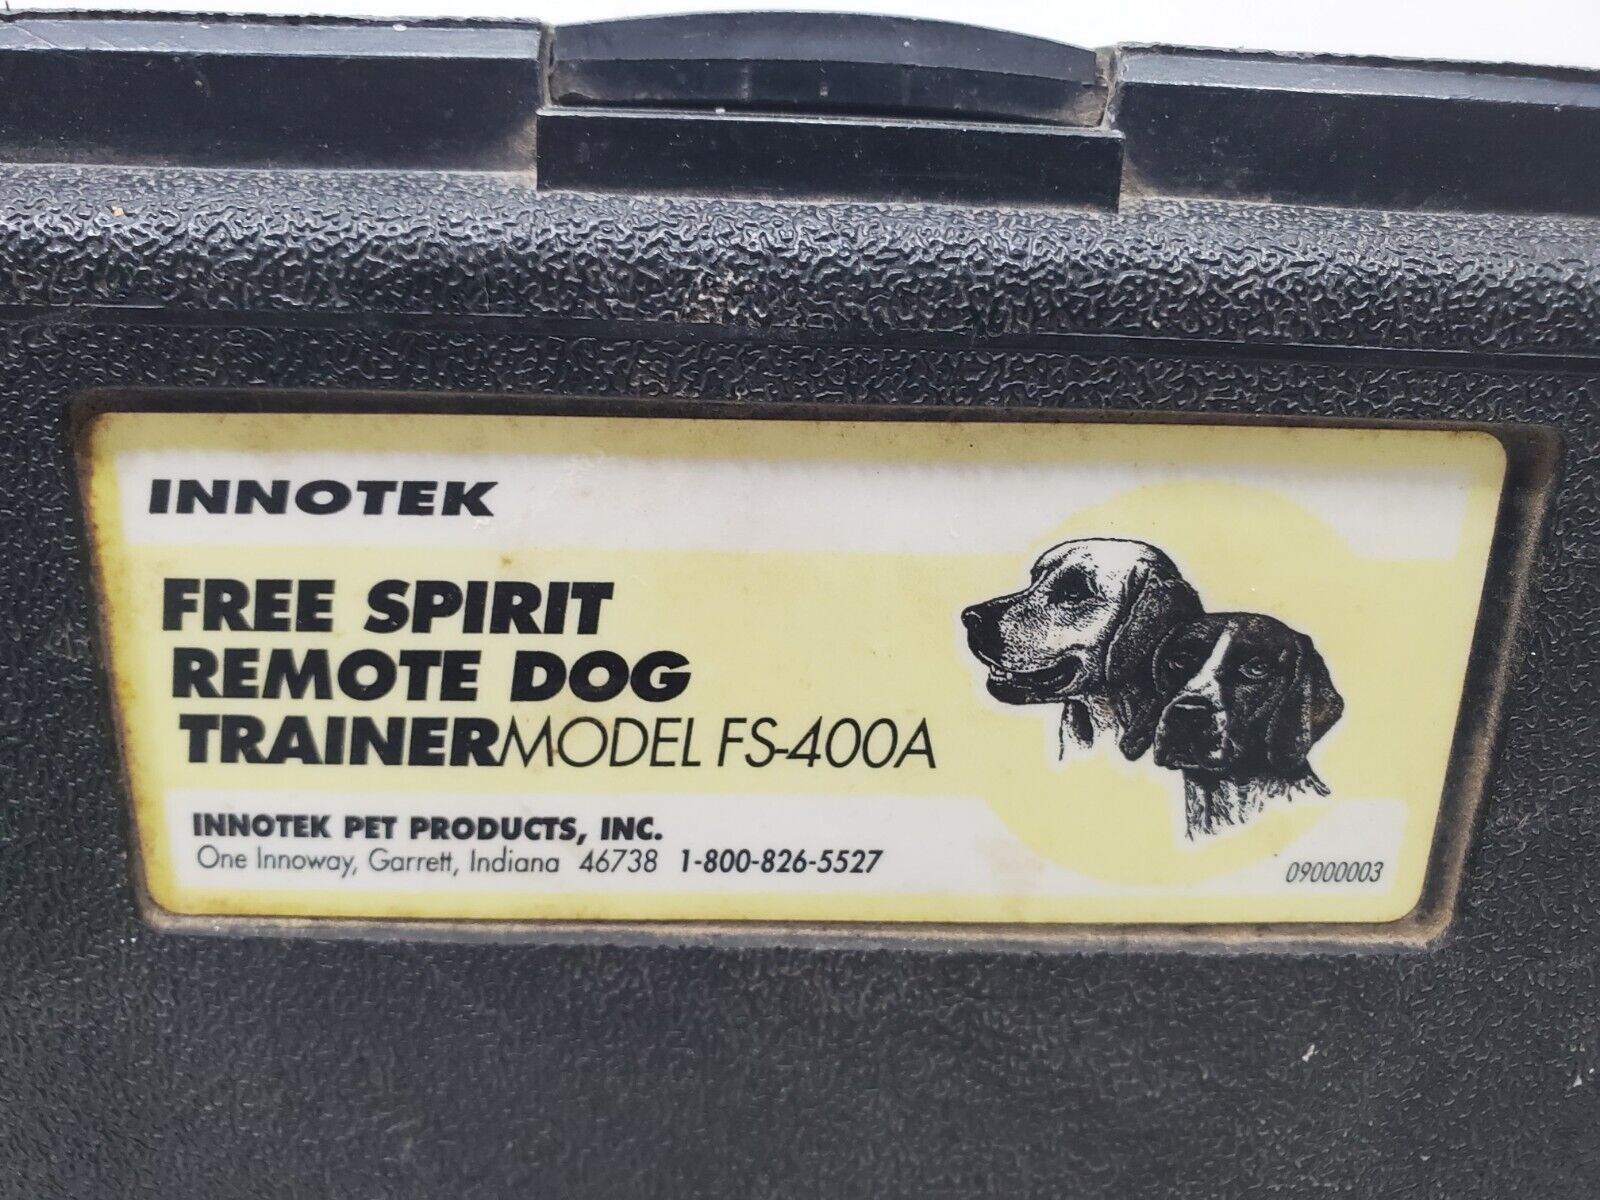 Innotek Free Spirit Remote Dog Trainer Model FS-400A